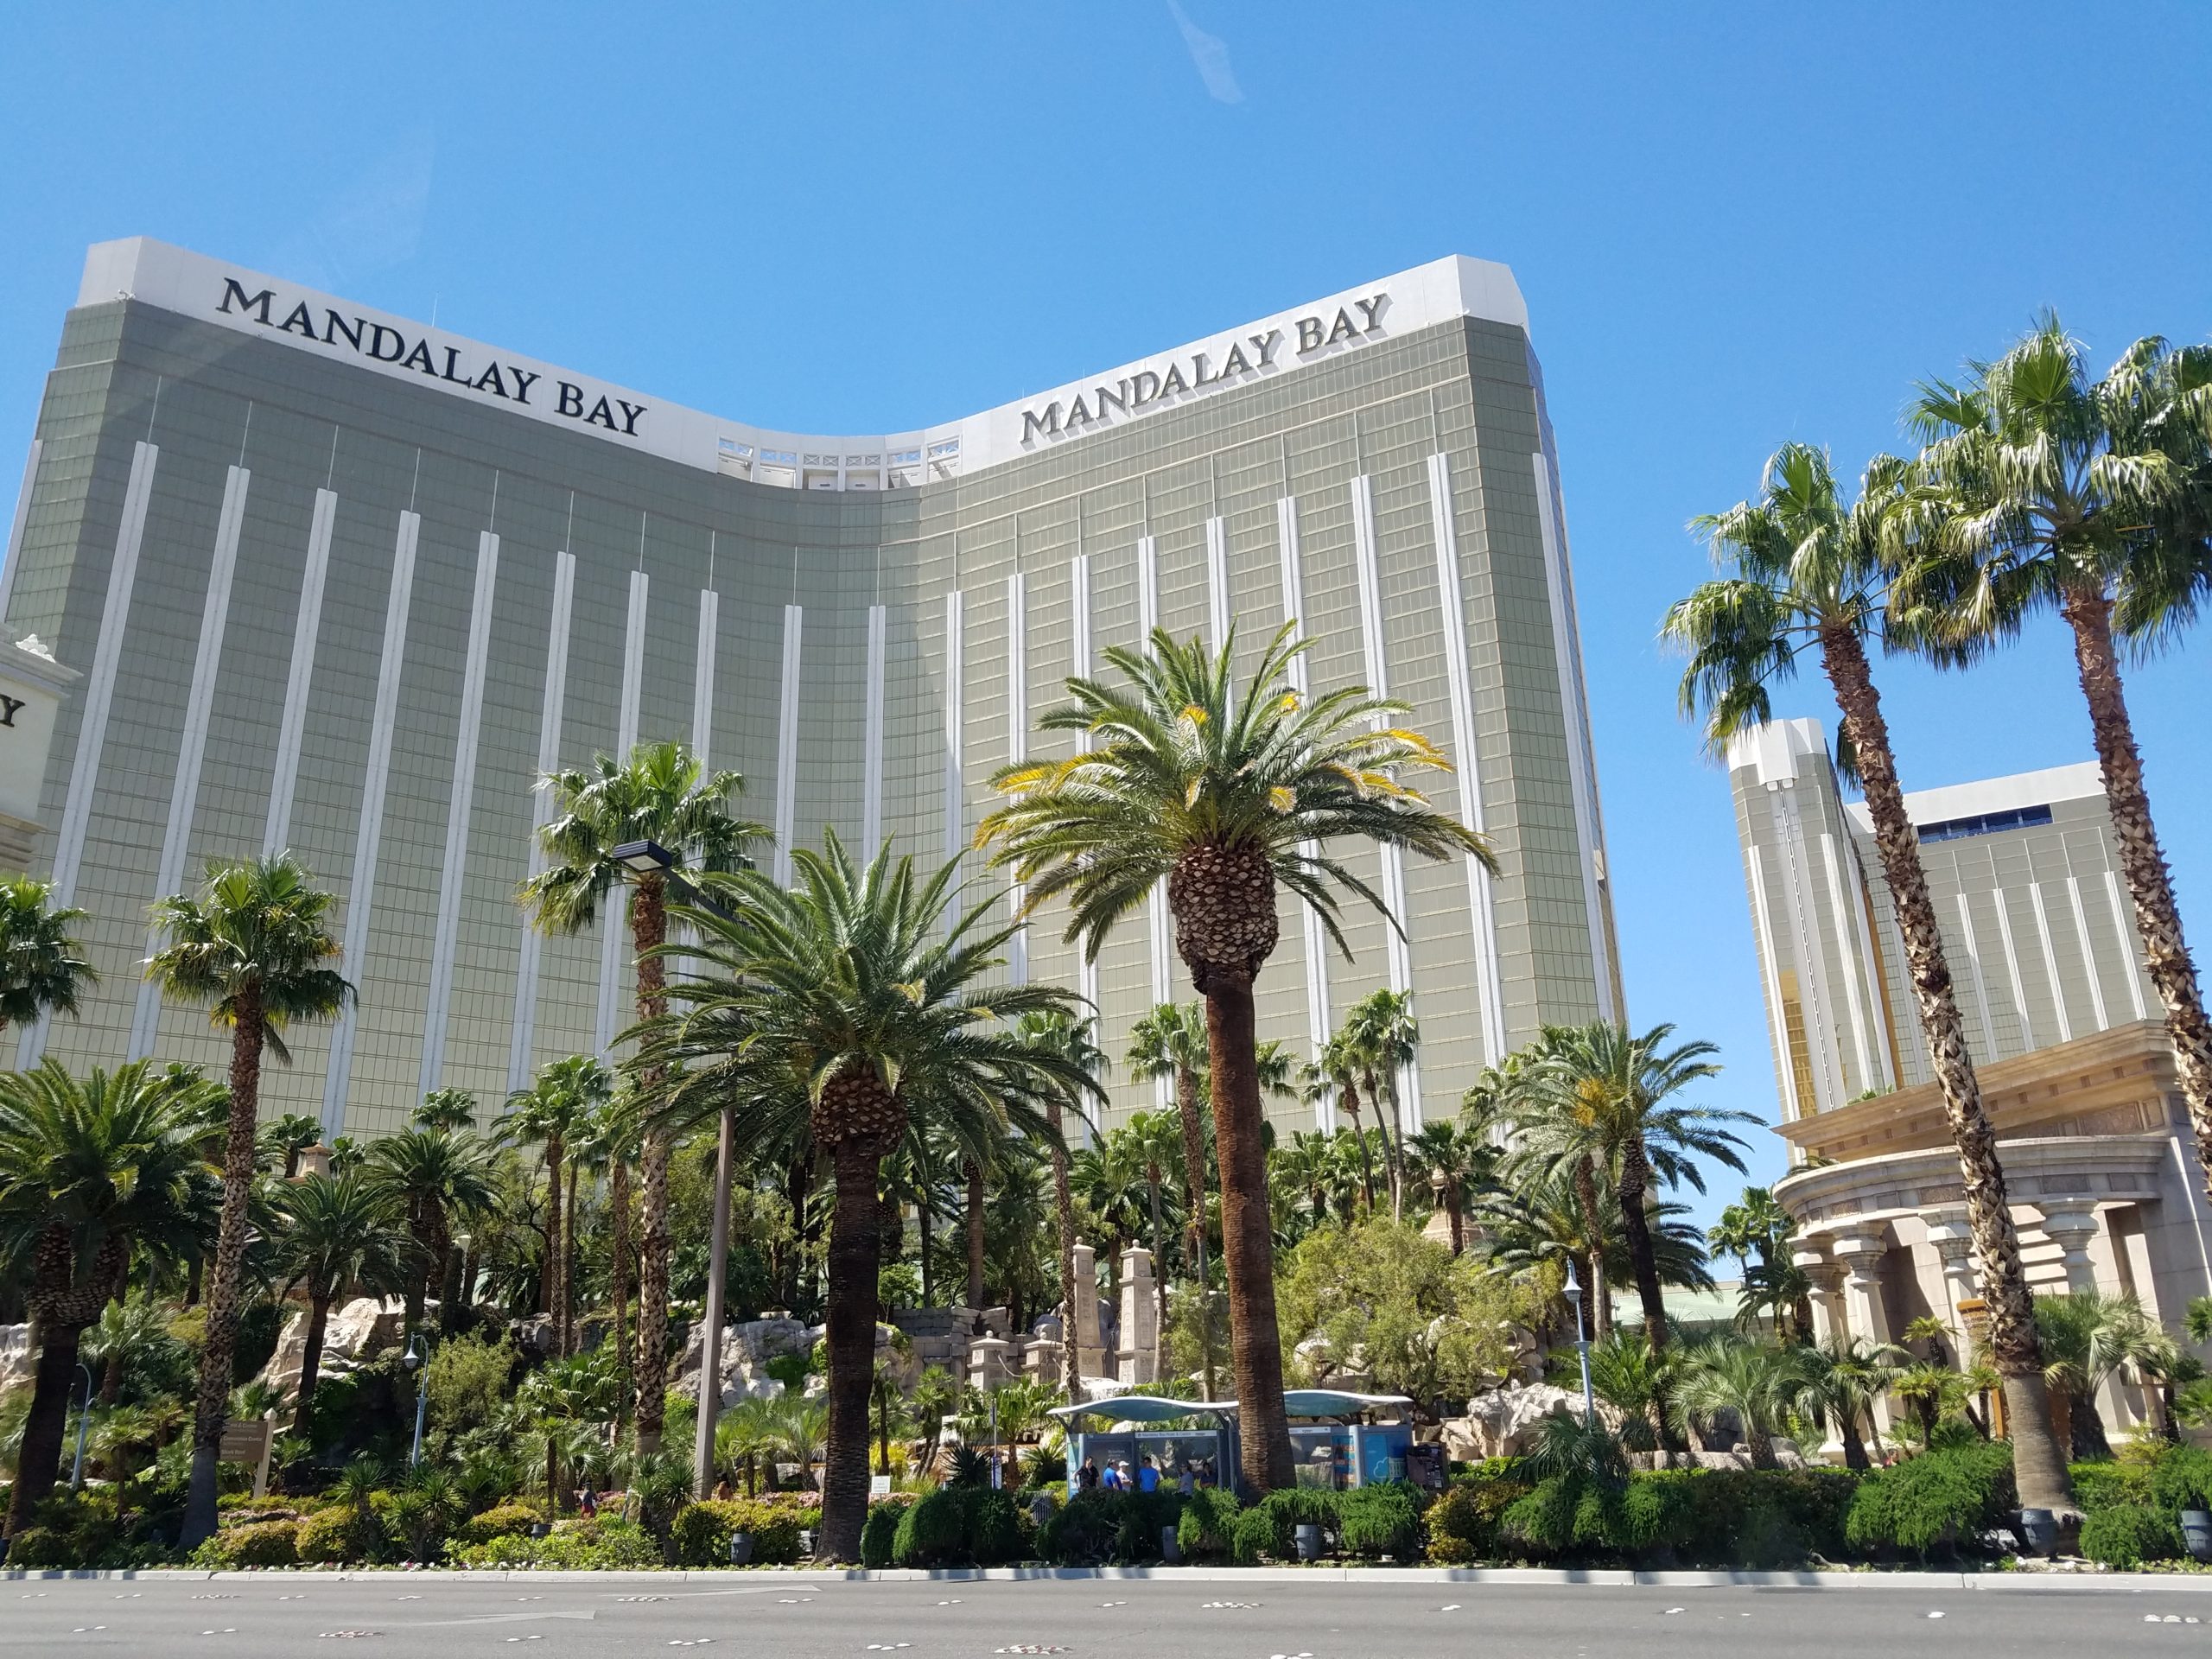 The Hopeful Traveler: The Cosmopolitan of Las Vegas: The Casino Floor